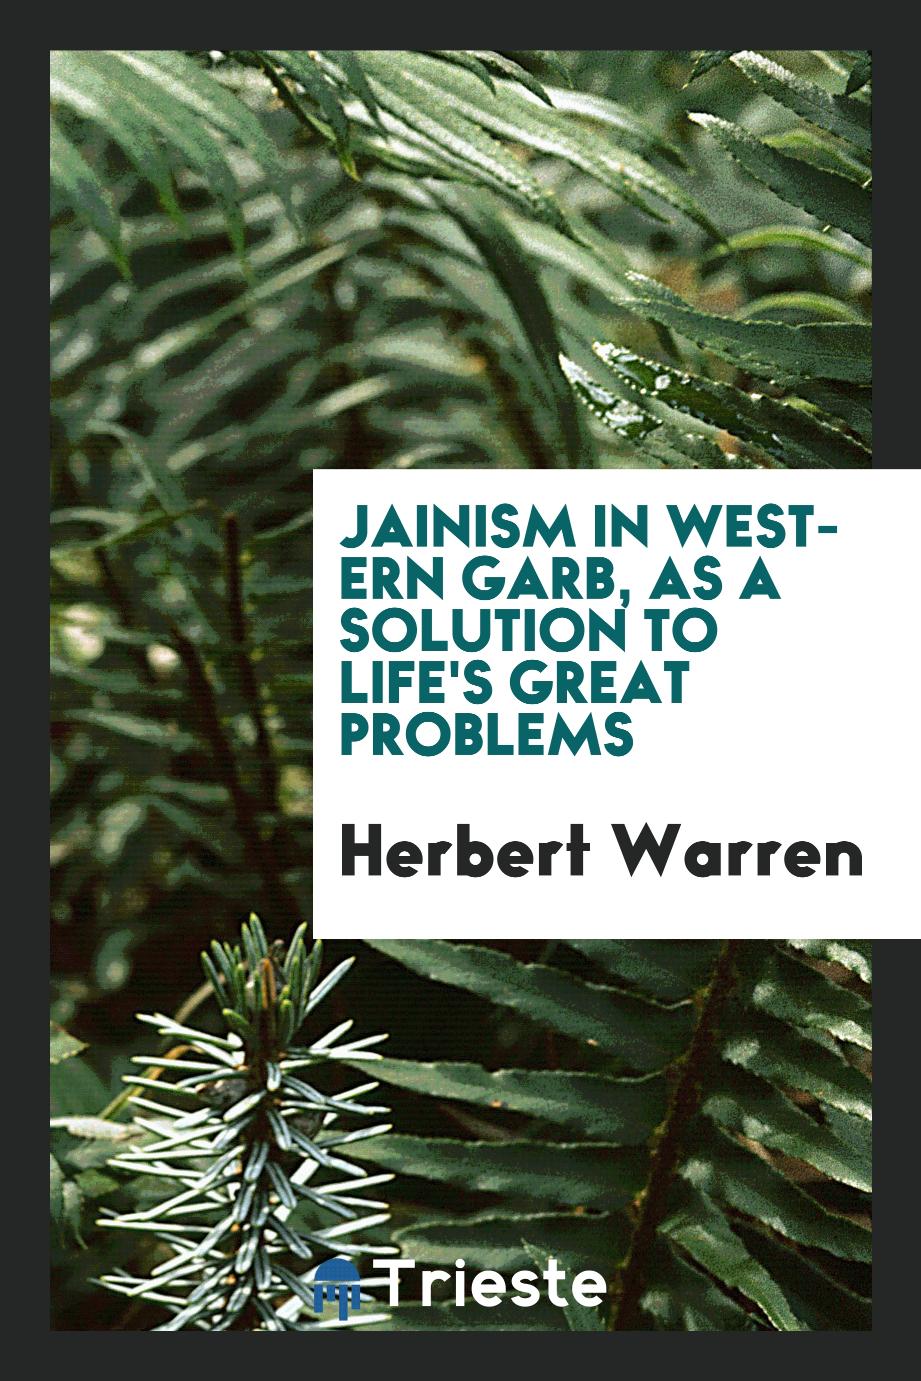 Herbert Warren - Jainism in western garb, as a solution to life's great problems